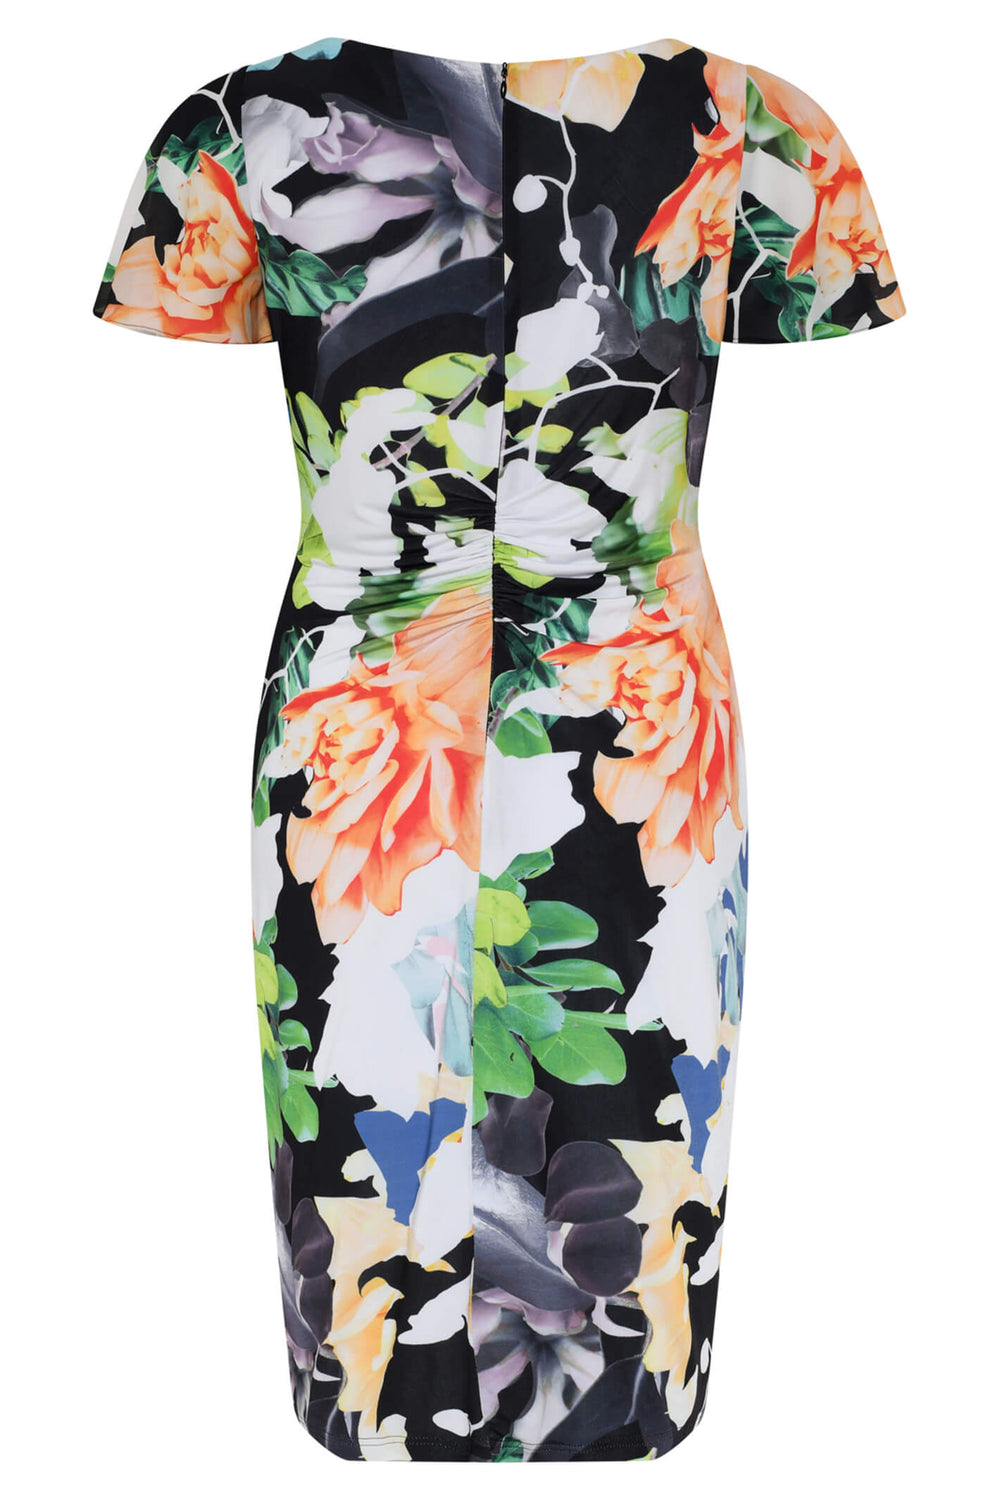 Tia 78338 Floral Print Shift Dress - Experience Boutique